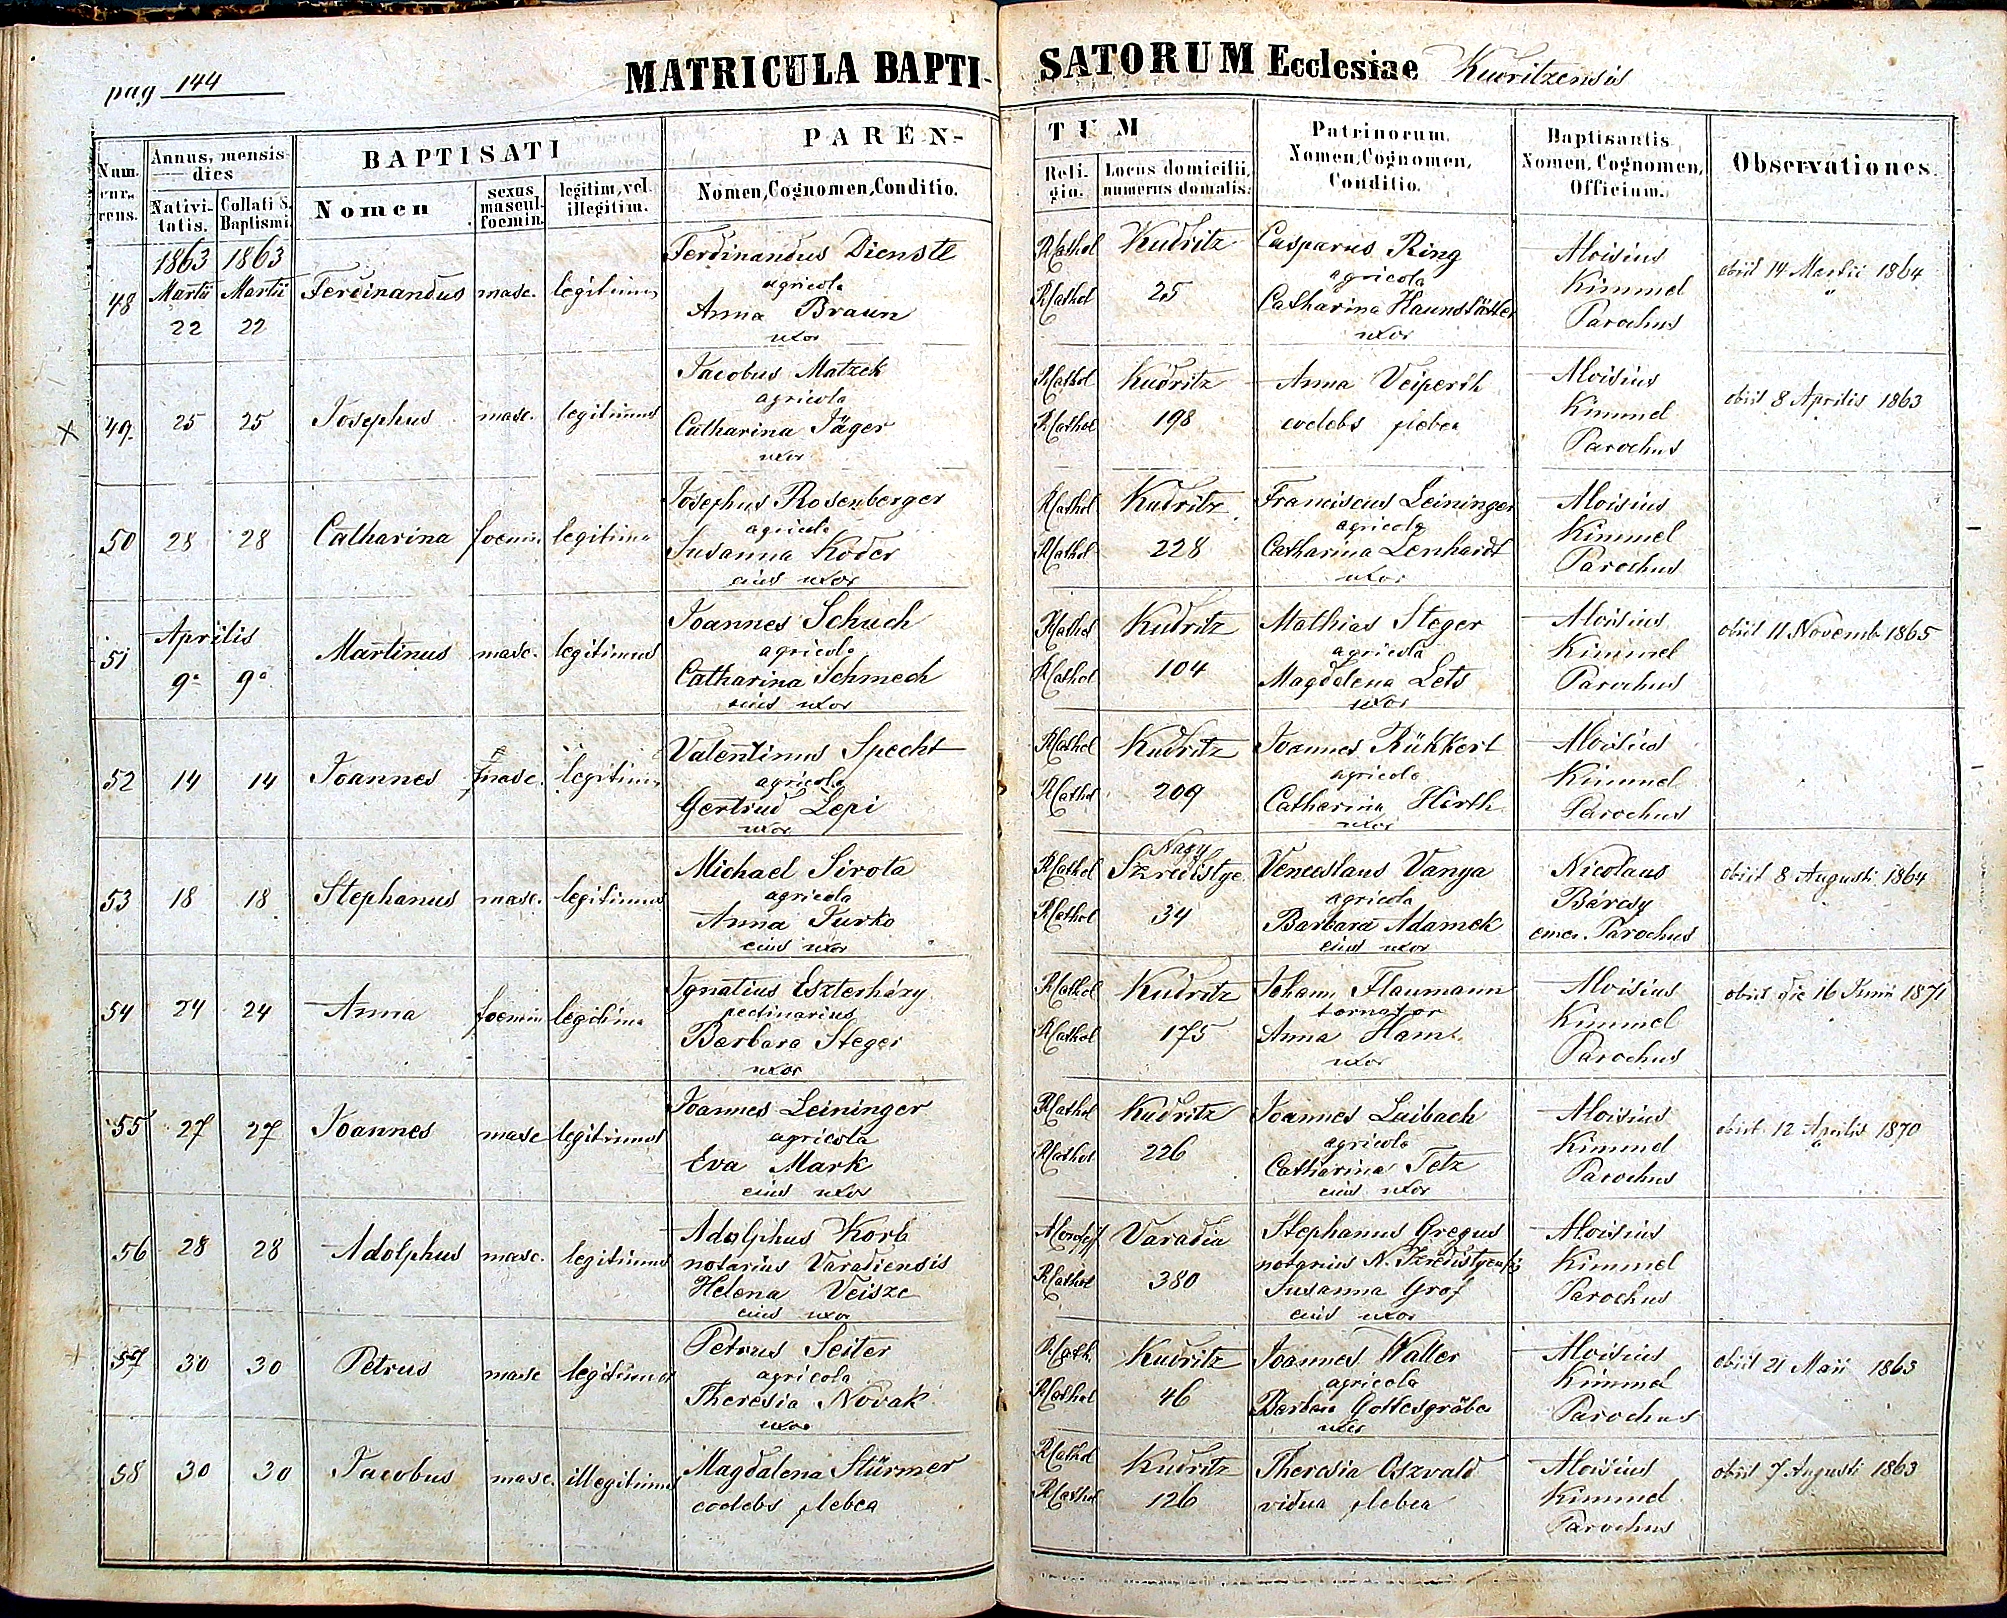 images/church_records/BIRTHS/1852-1870B/144